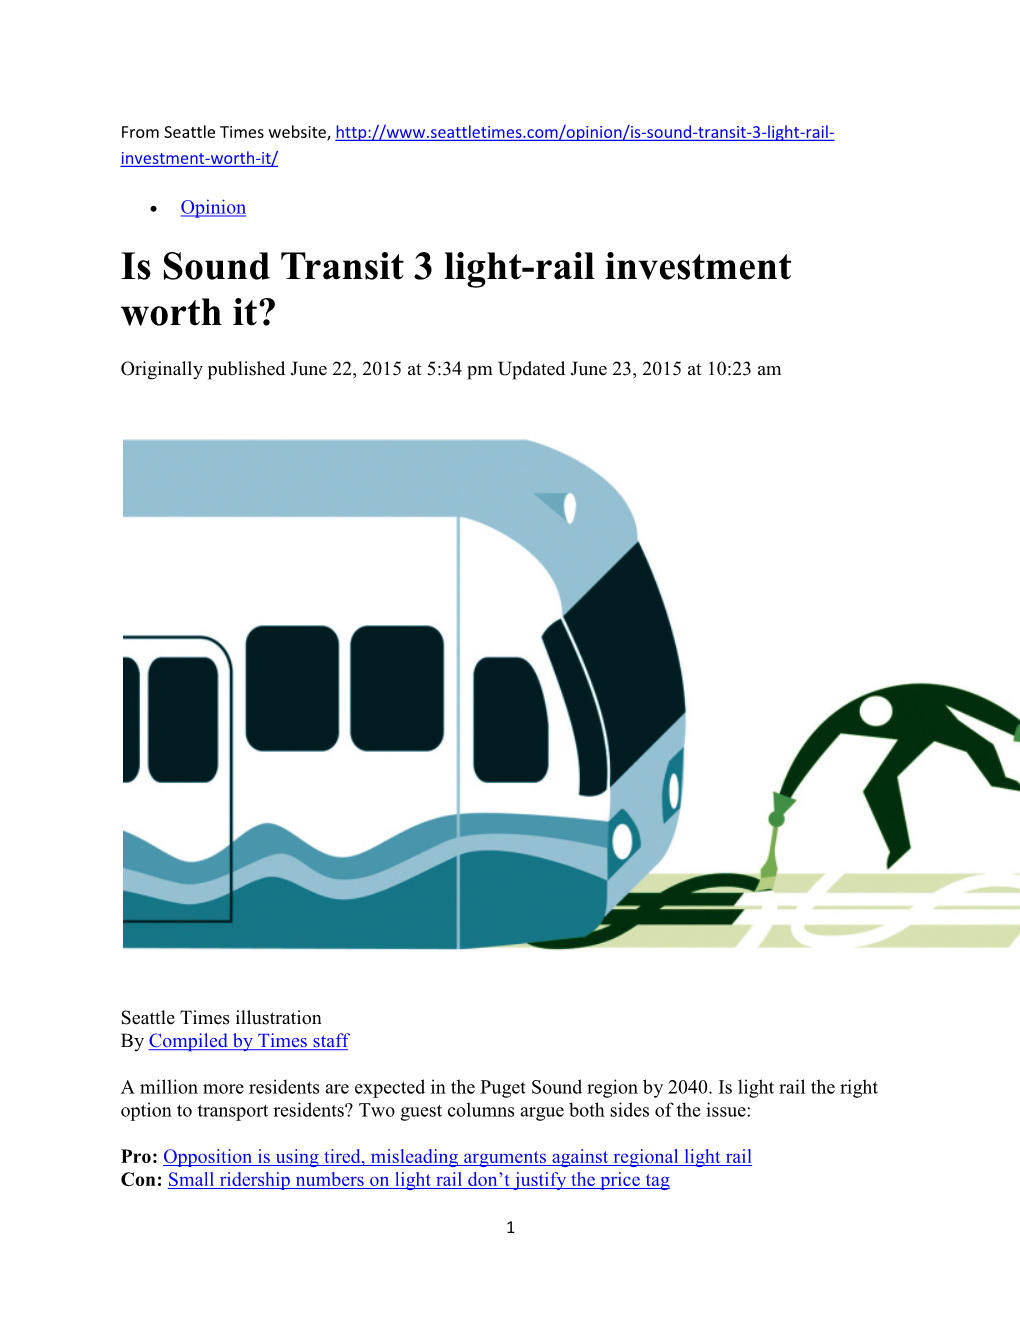 Is Sound Transit 3 Light-Rail Investment Worth It?